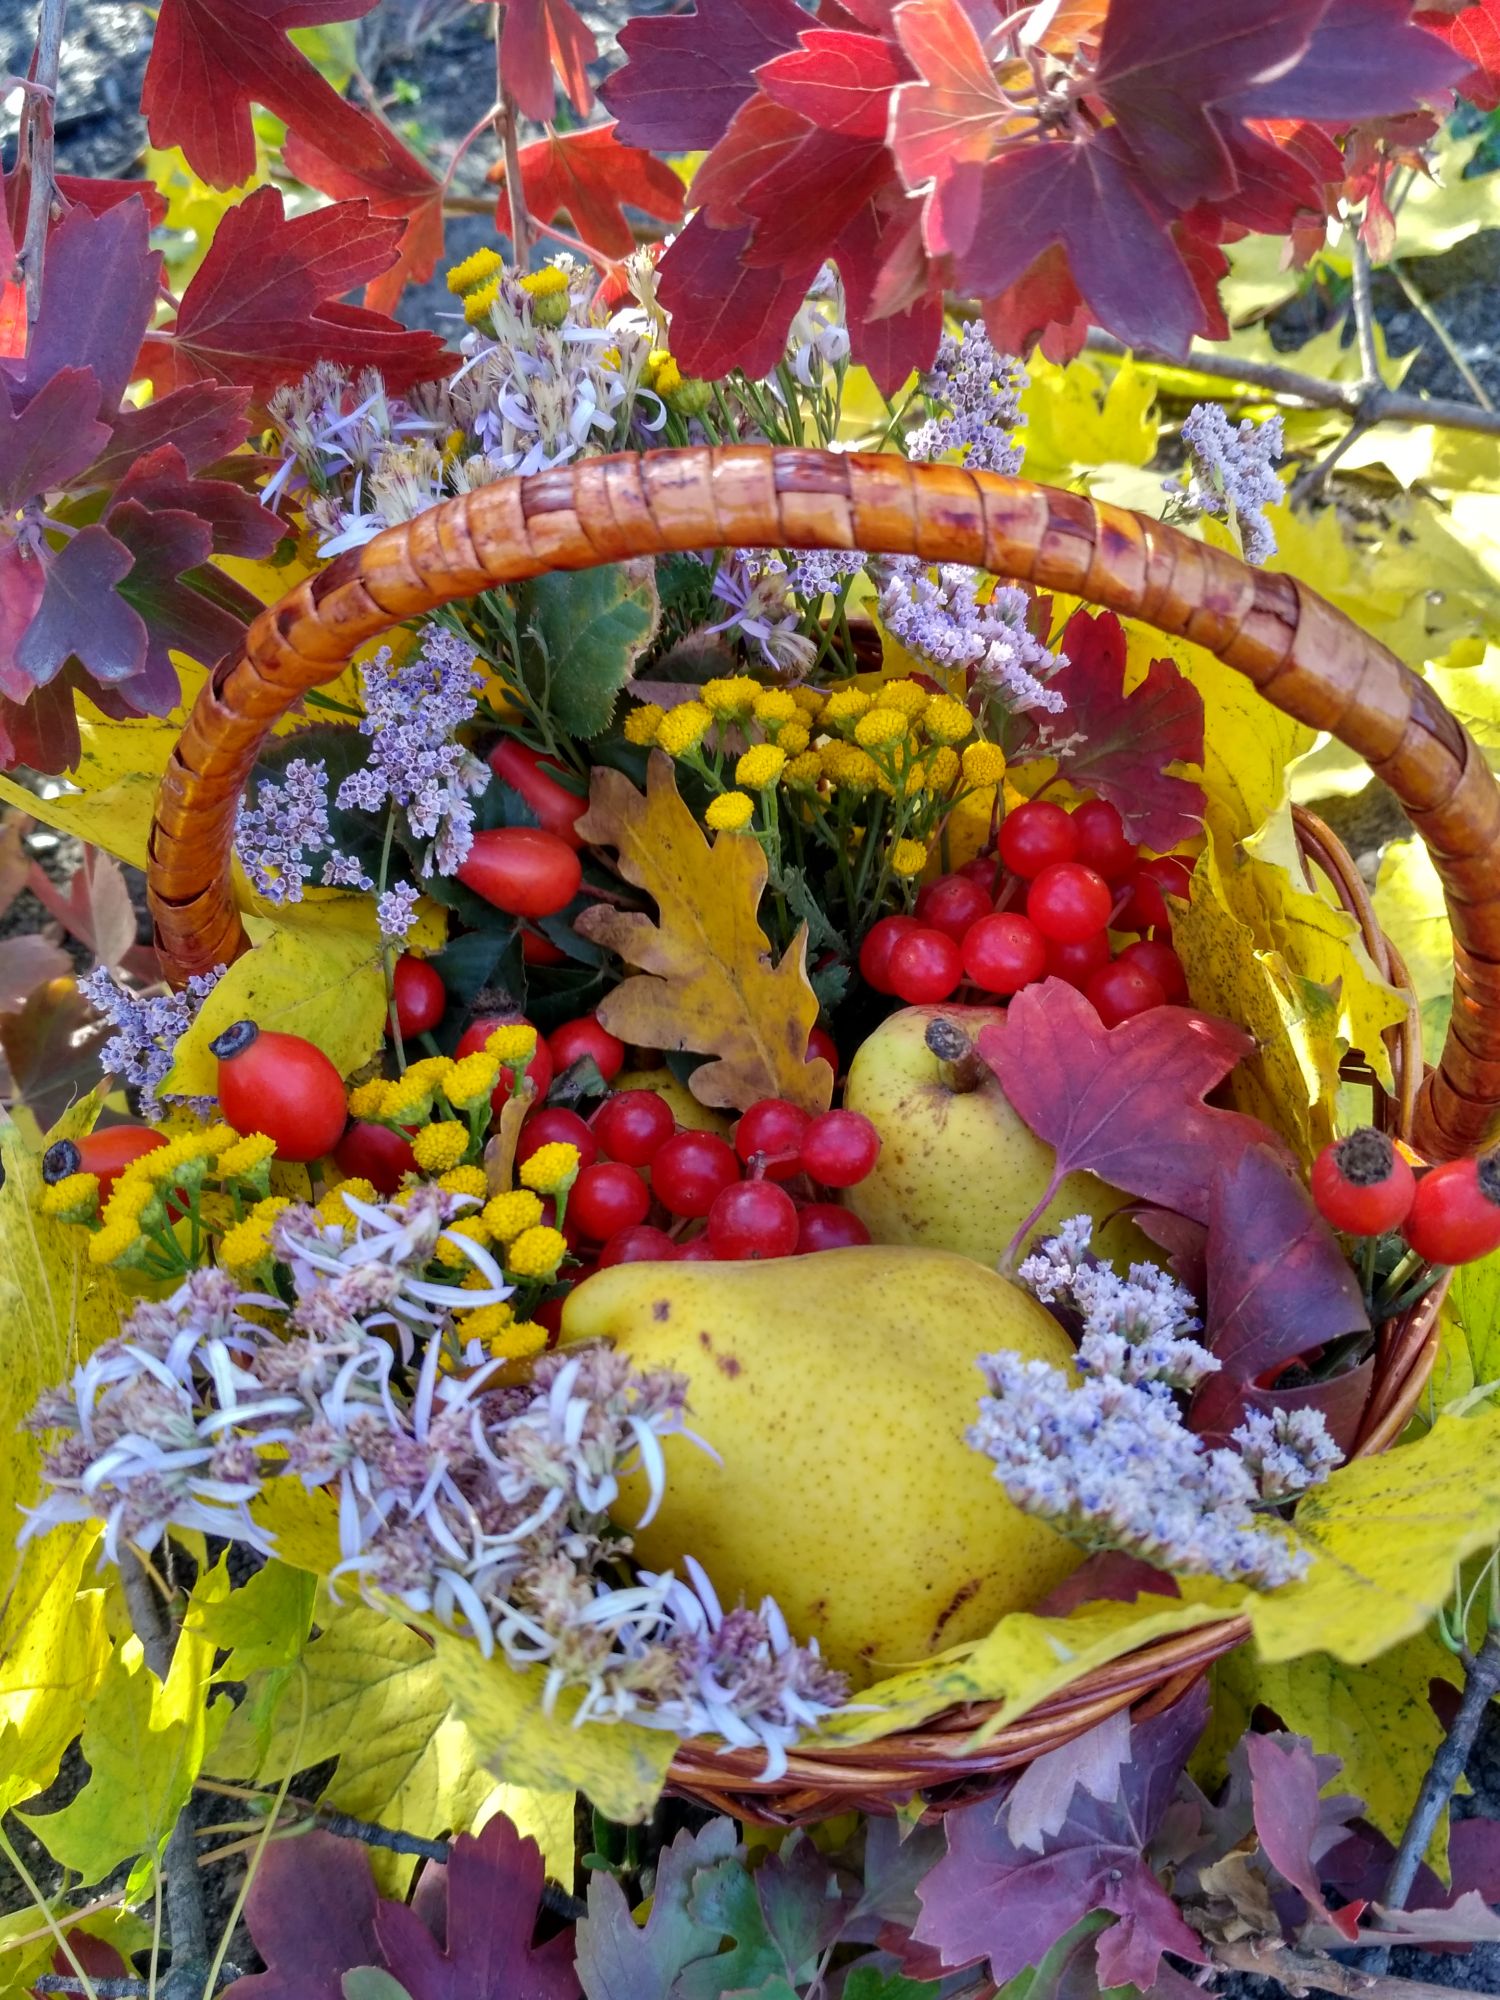 Осеннее богатство. Осенняя корзинка. Корзина дары осени. Осеннее лукошко. Осенняя корзина с фруктами и цветами.